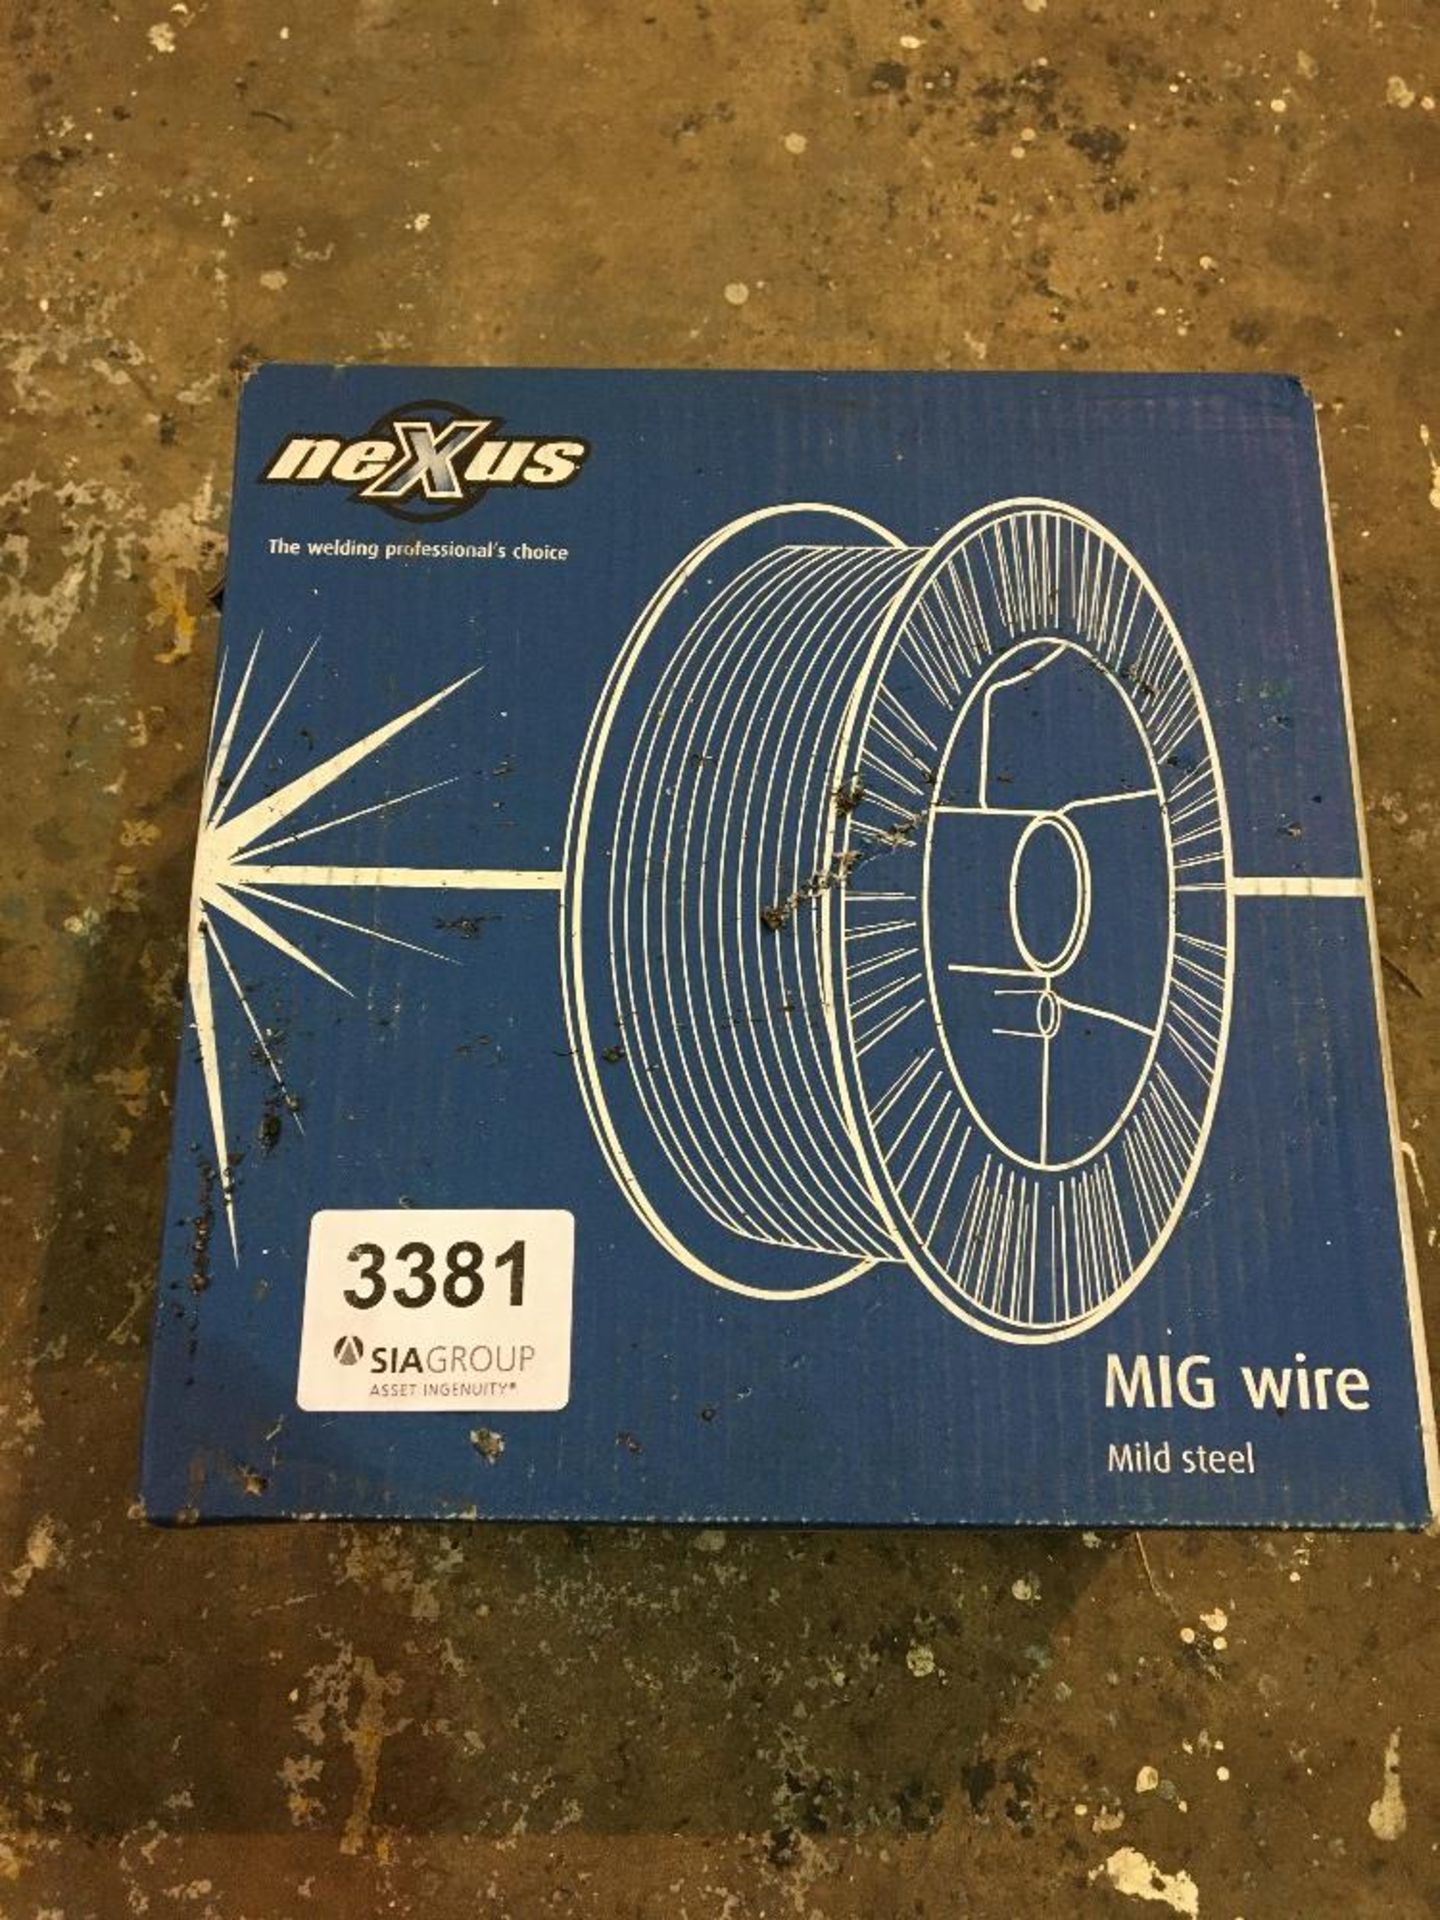 (2) Nexus SG2 1.0mm mild steel Mig welding wire with plastic spool boxed